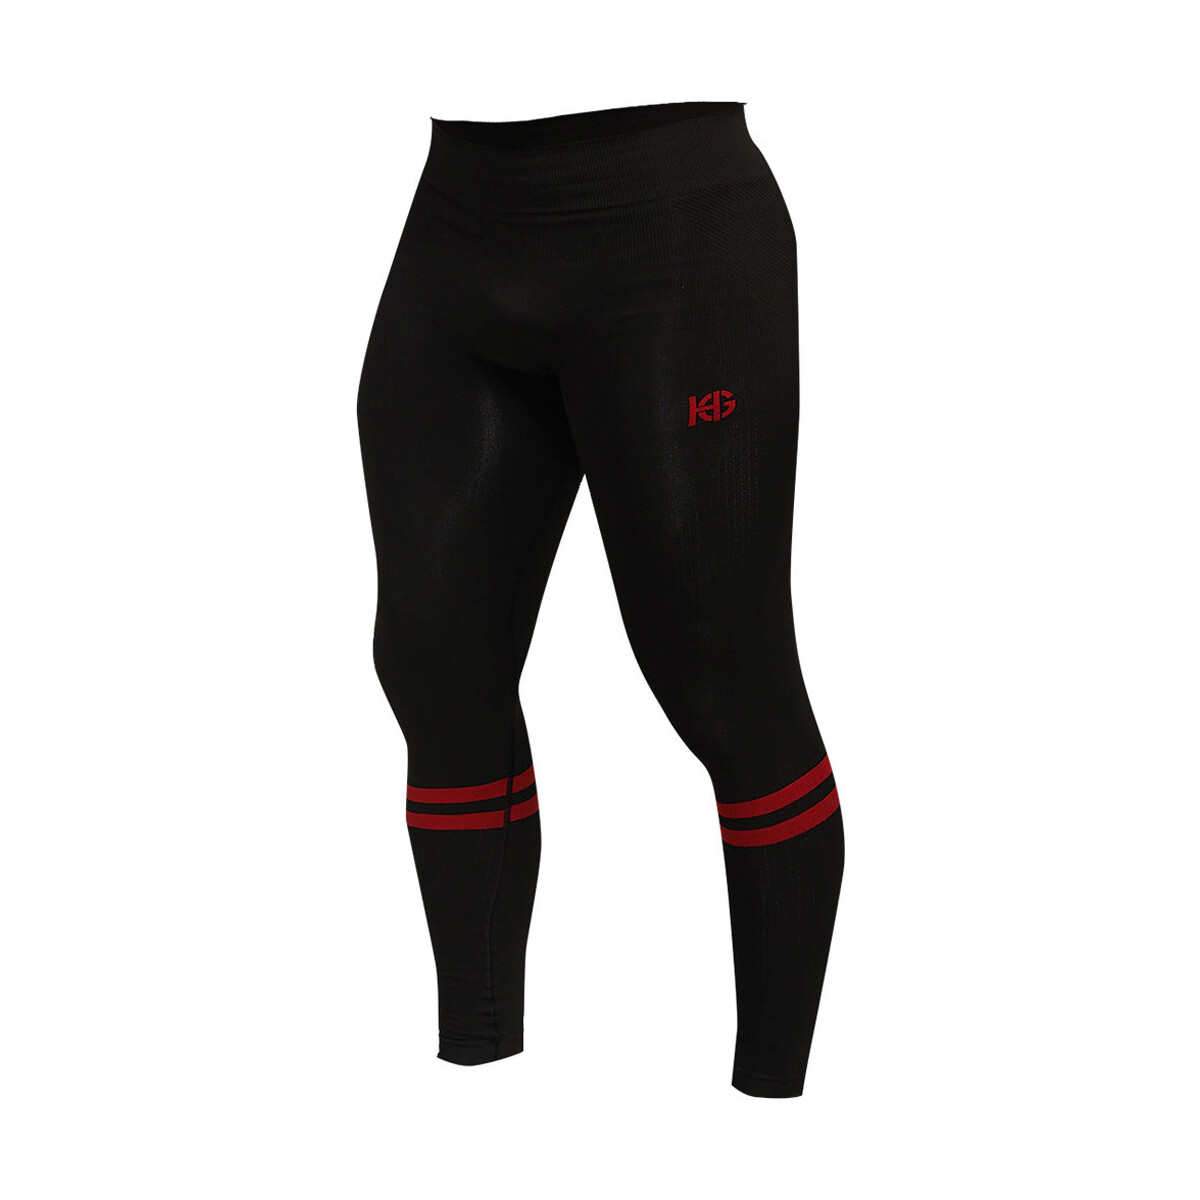 textil Leggings Sport Hg HG-PENTRO LONG COMPRESSIVE PANTS Negro